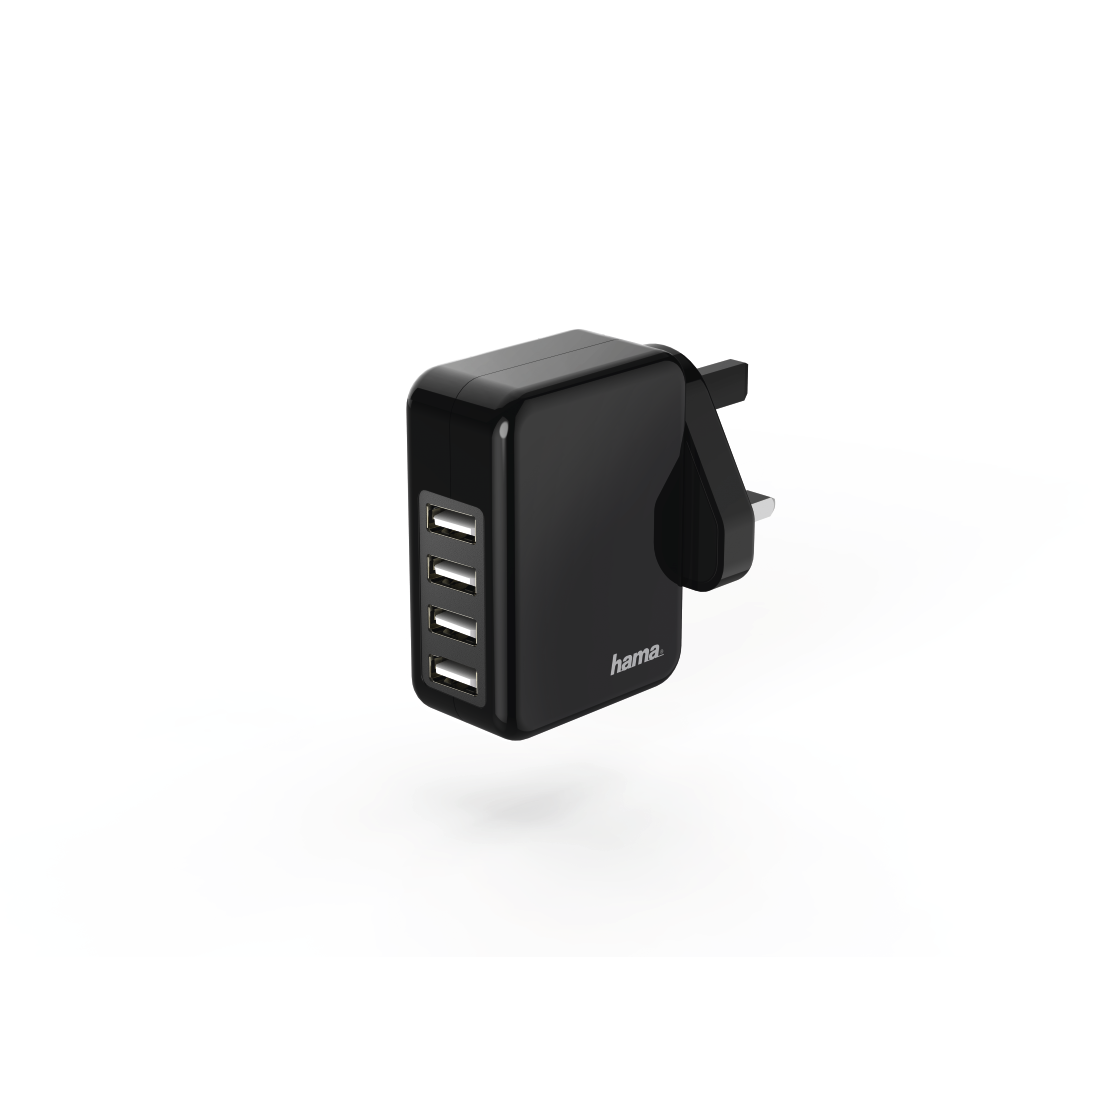 Hama Charger, 4 USB, 4.8 A, with UK plug, Black